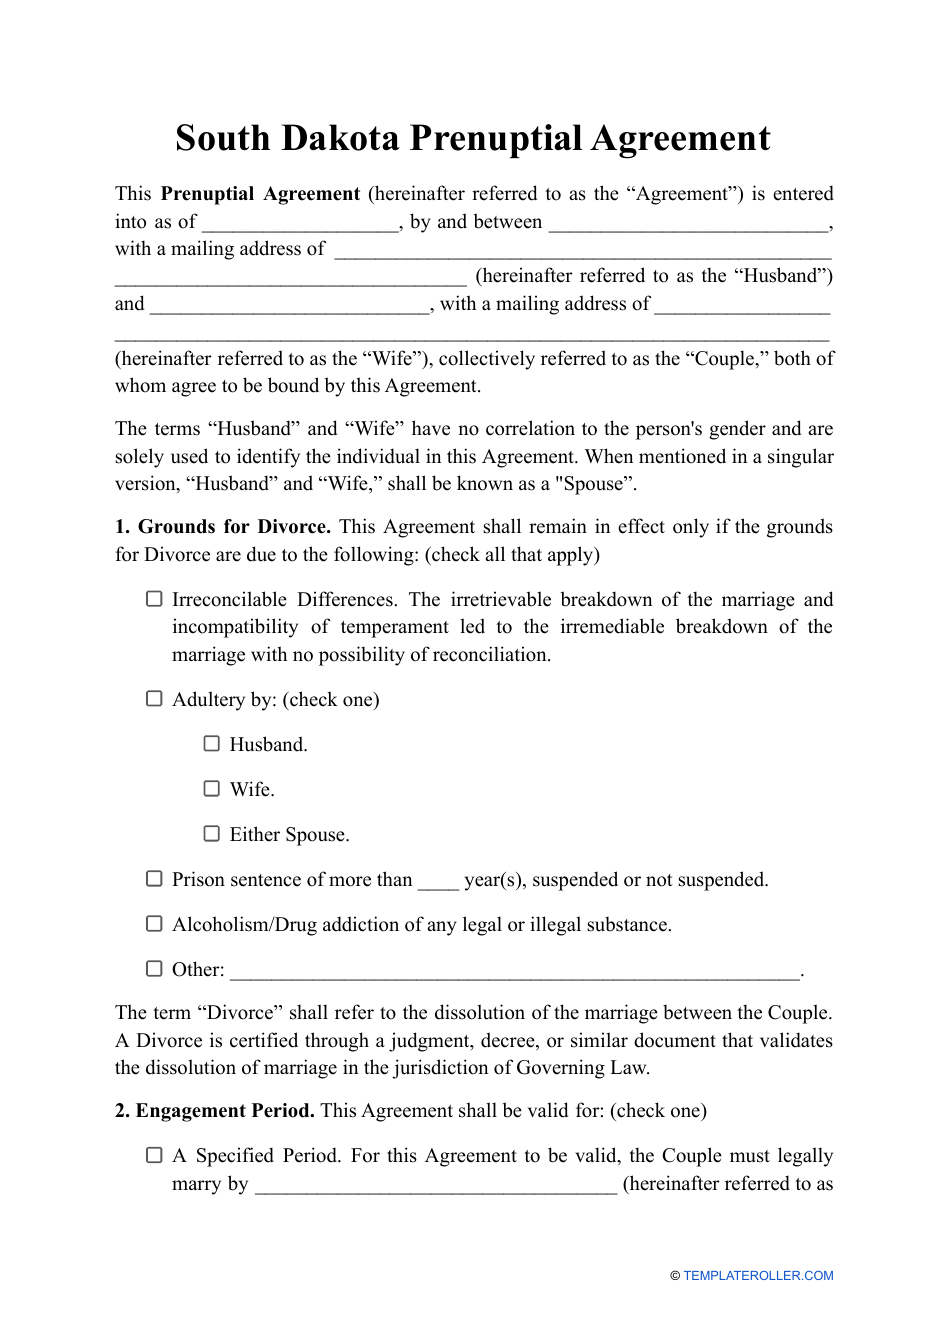 Prenuptial Agreement Template - South Dakota, Page 1